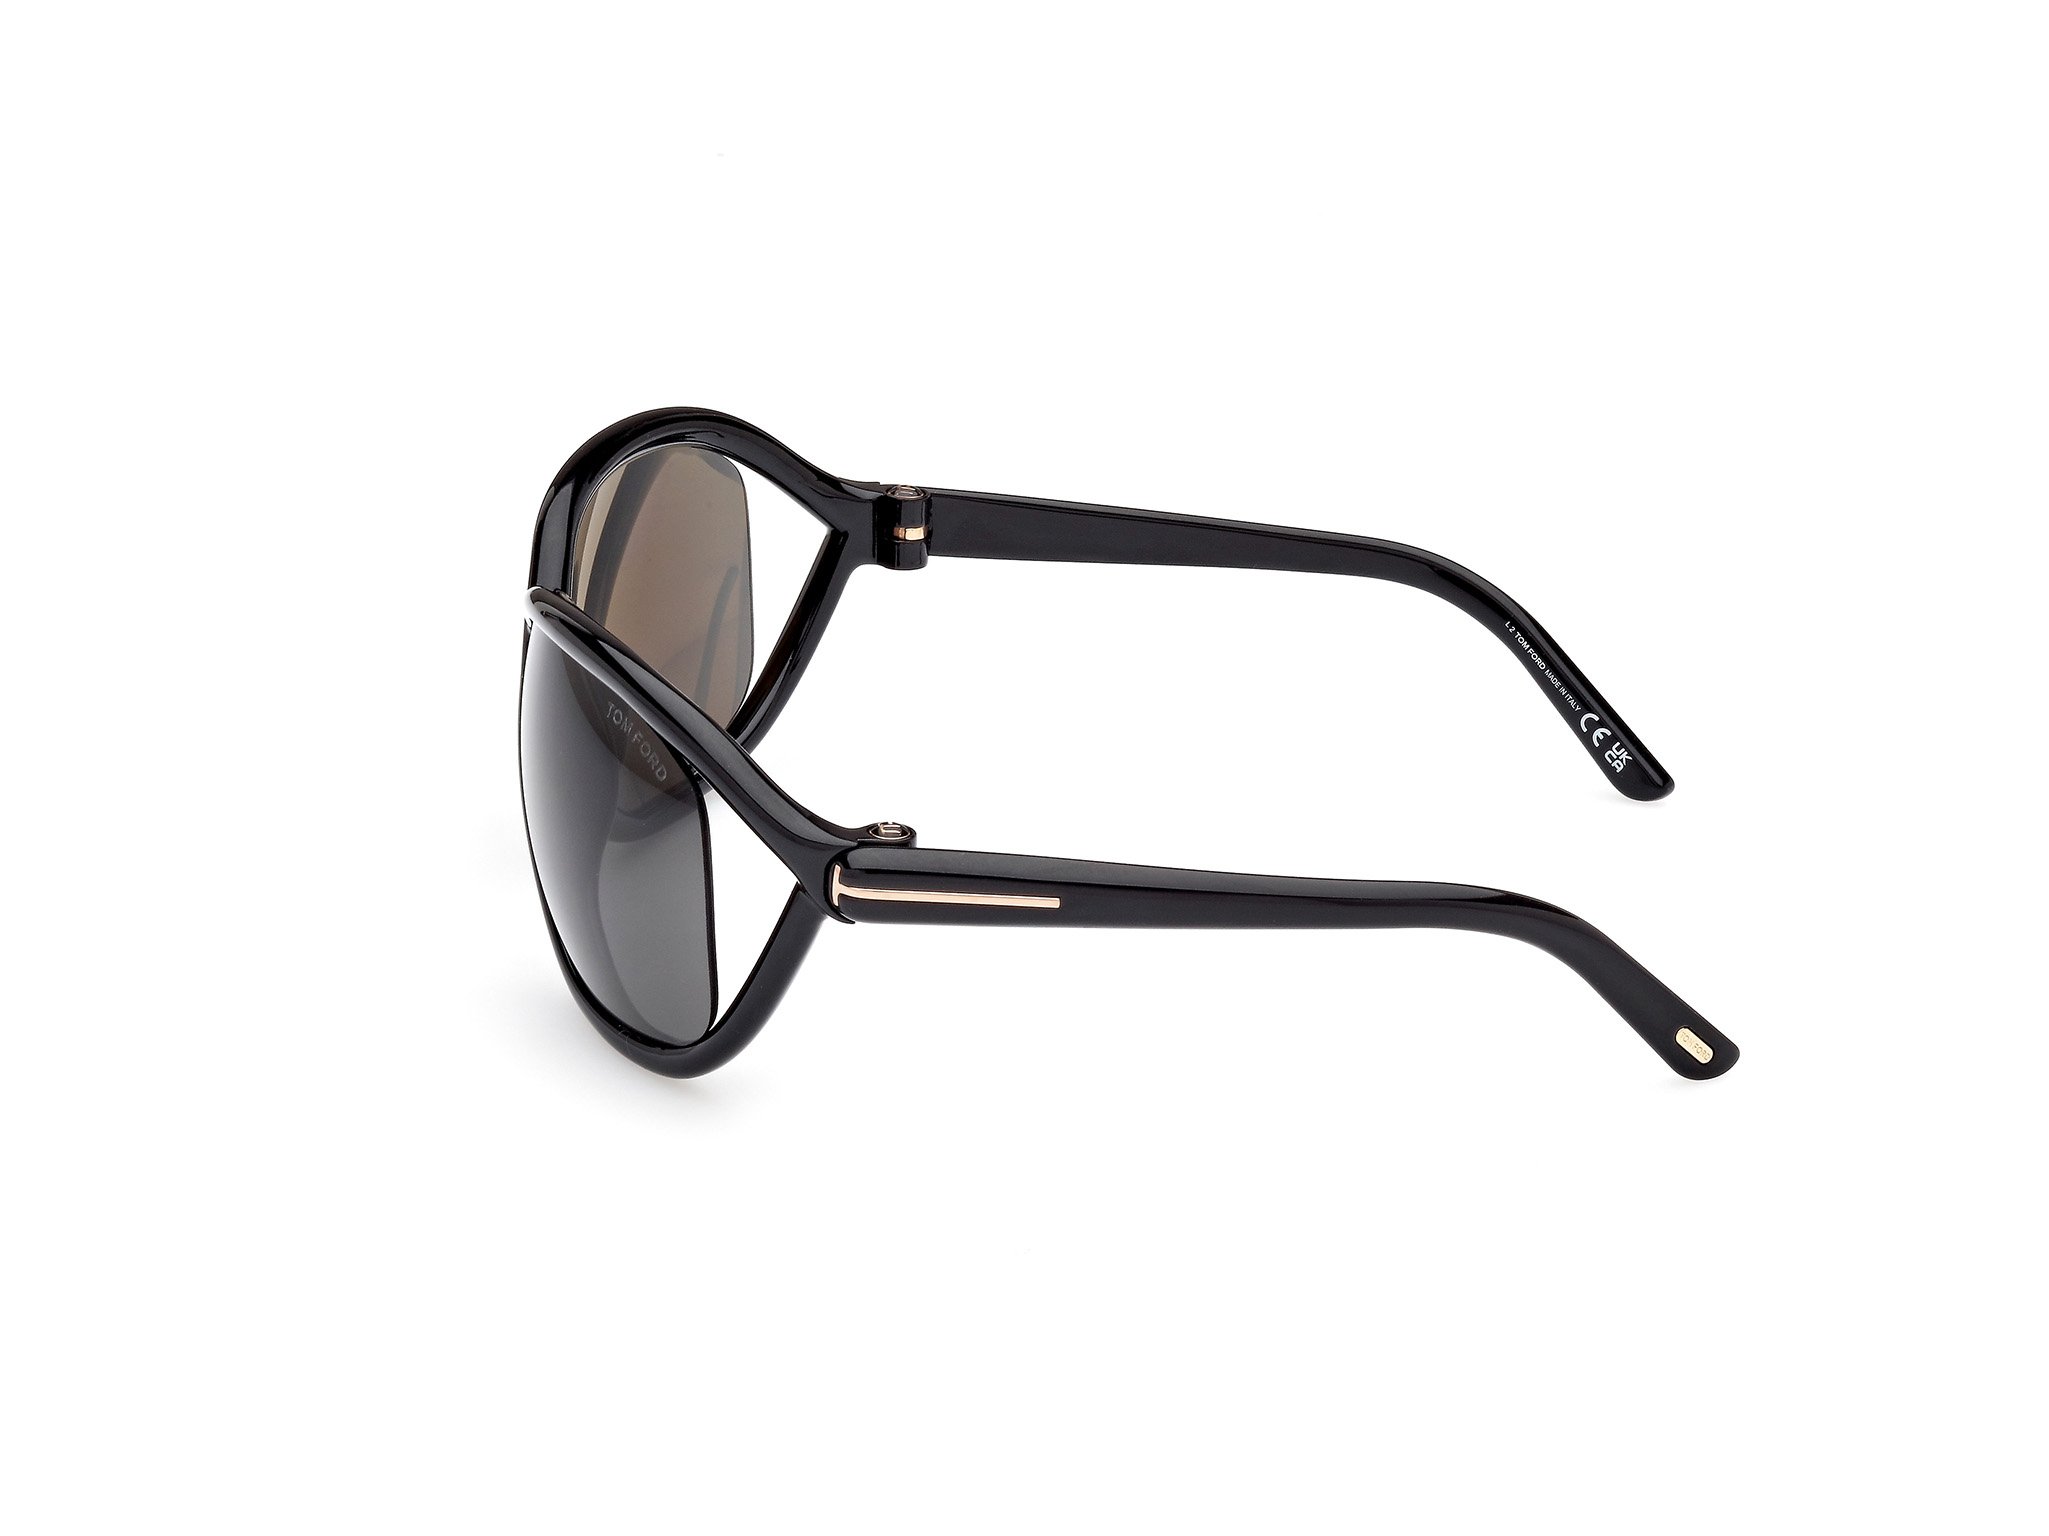  Tom Ford Sonnenbrille Fernanda in schwarz FT1069 01A